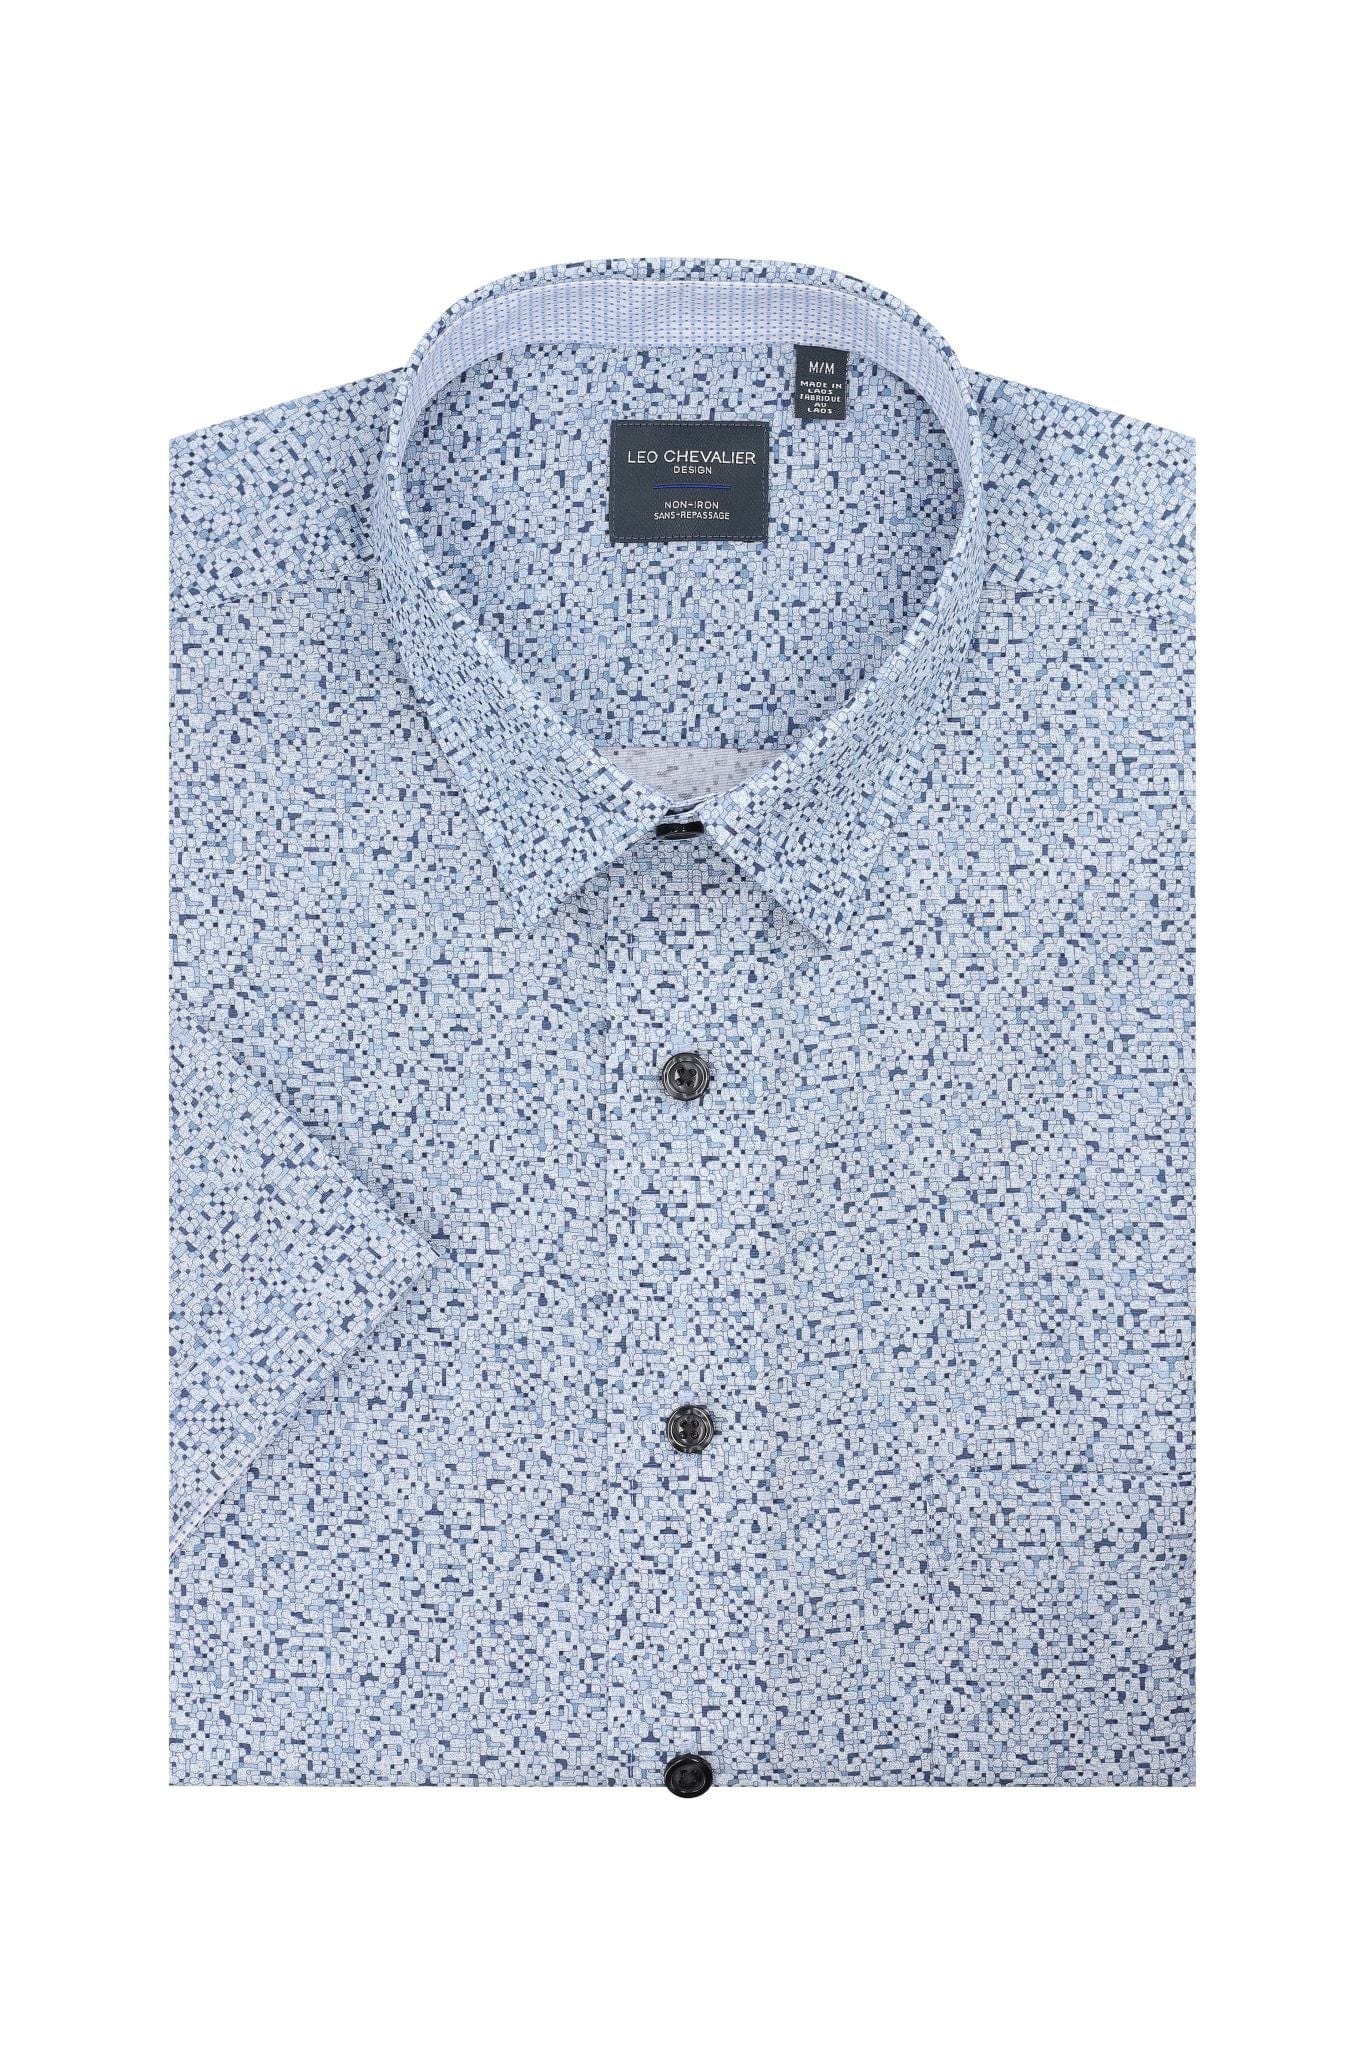 Leo Chevalier Design Sky Blue Casual Men's Hidden Button Down Short-Sleeve Shirt